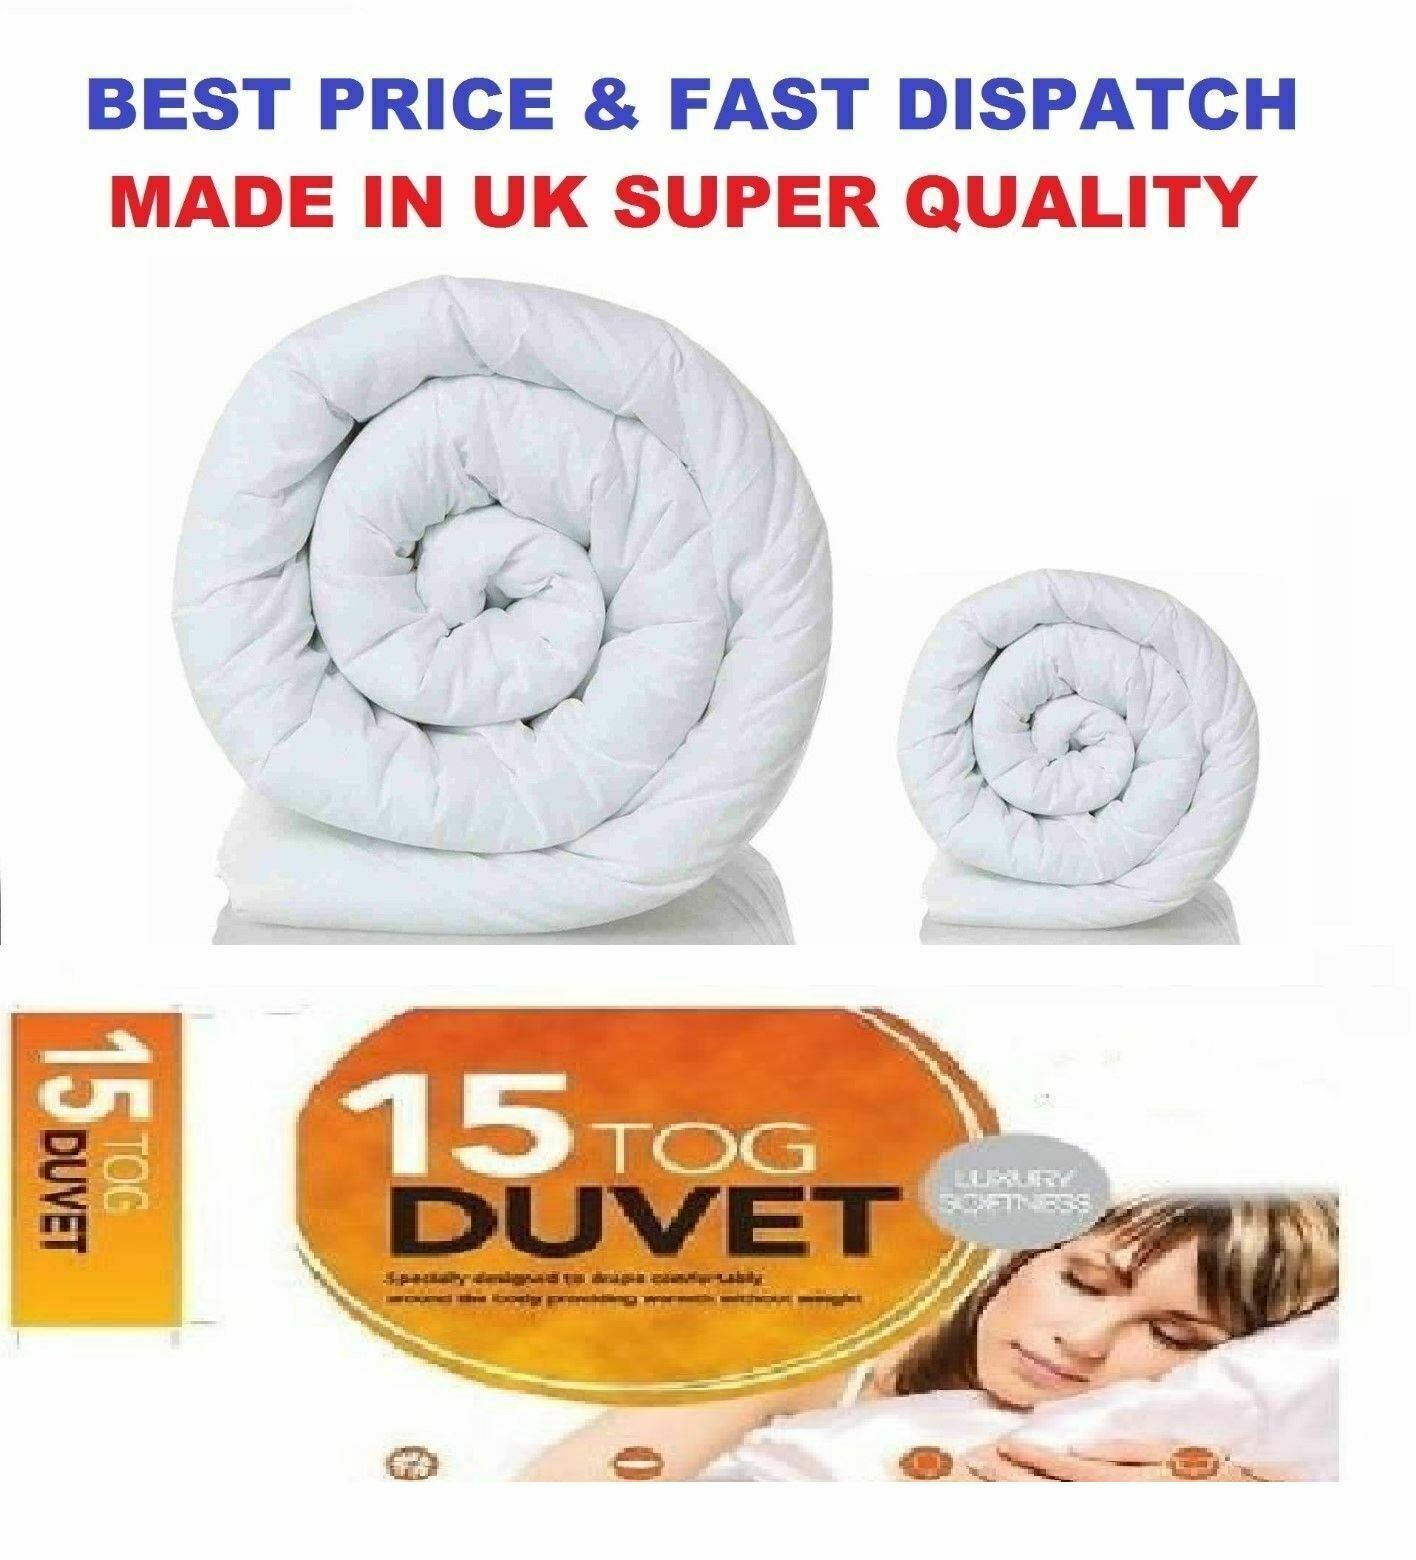 Microfiber Duvet Quilt Soft Warm Luxury Bed Duvets Quilt Bedding - TheComfortshop.co.ukDuvet0721718973508thecomfortshopTheComfortshop.co.uk15-TOG-Microfibre-Duvet-Quilt-SuperkingSuper King Only15 Tog OnlyMicrofiber Duvet Quilt Soft Warm Luxury Bed Duvets Quilt Bedding - TheComfortshop.co.uk